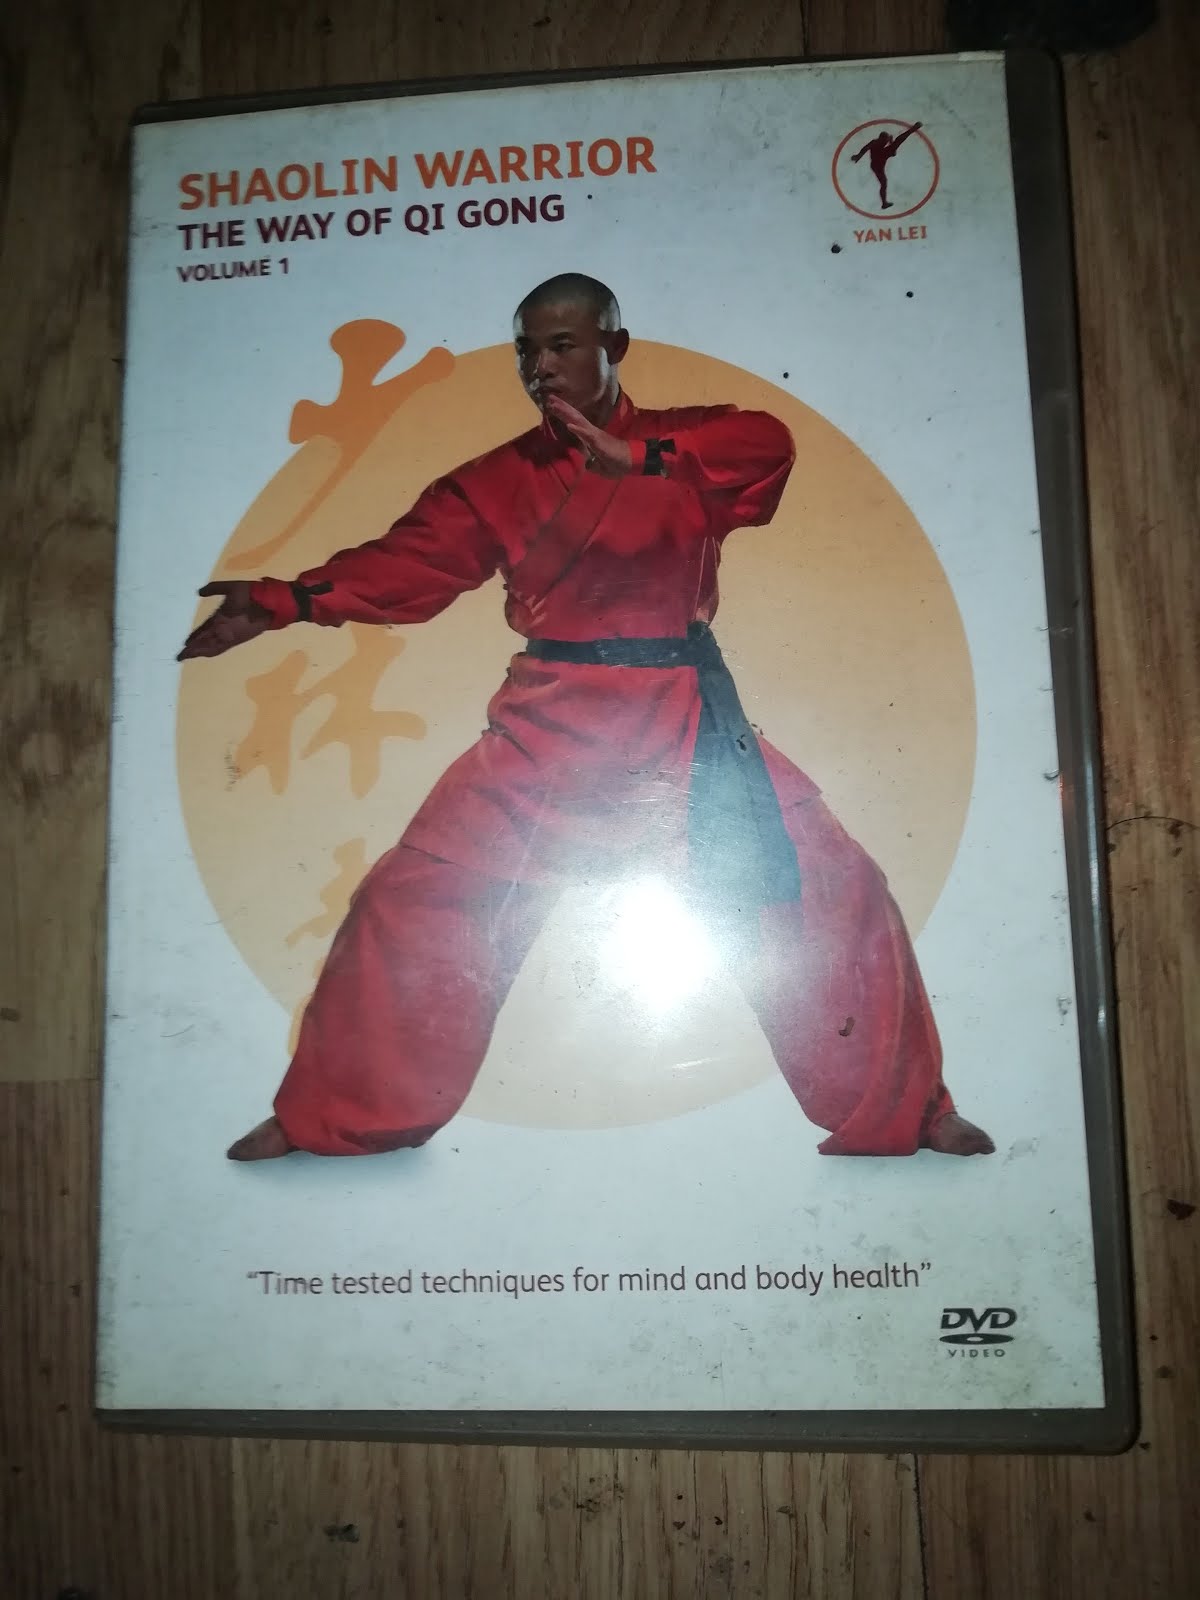 Shaolin Warrior DVD.